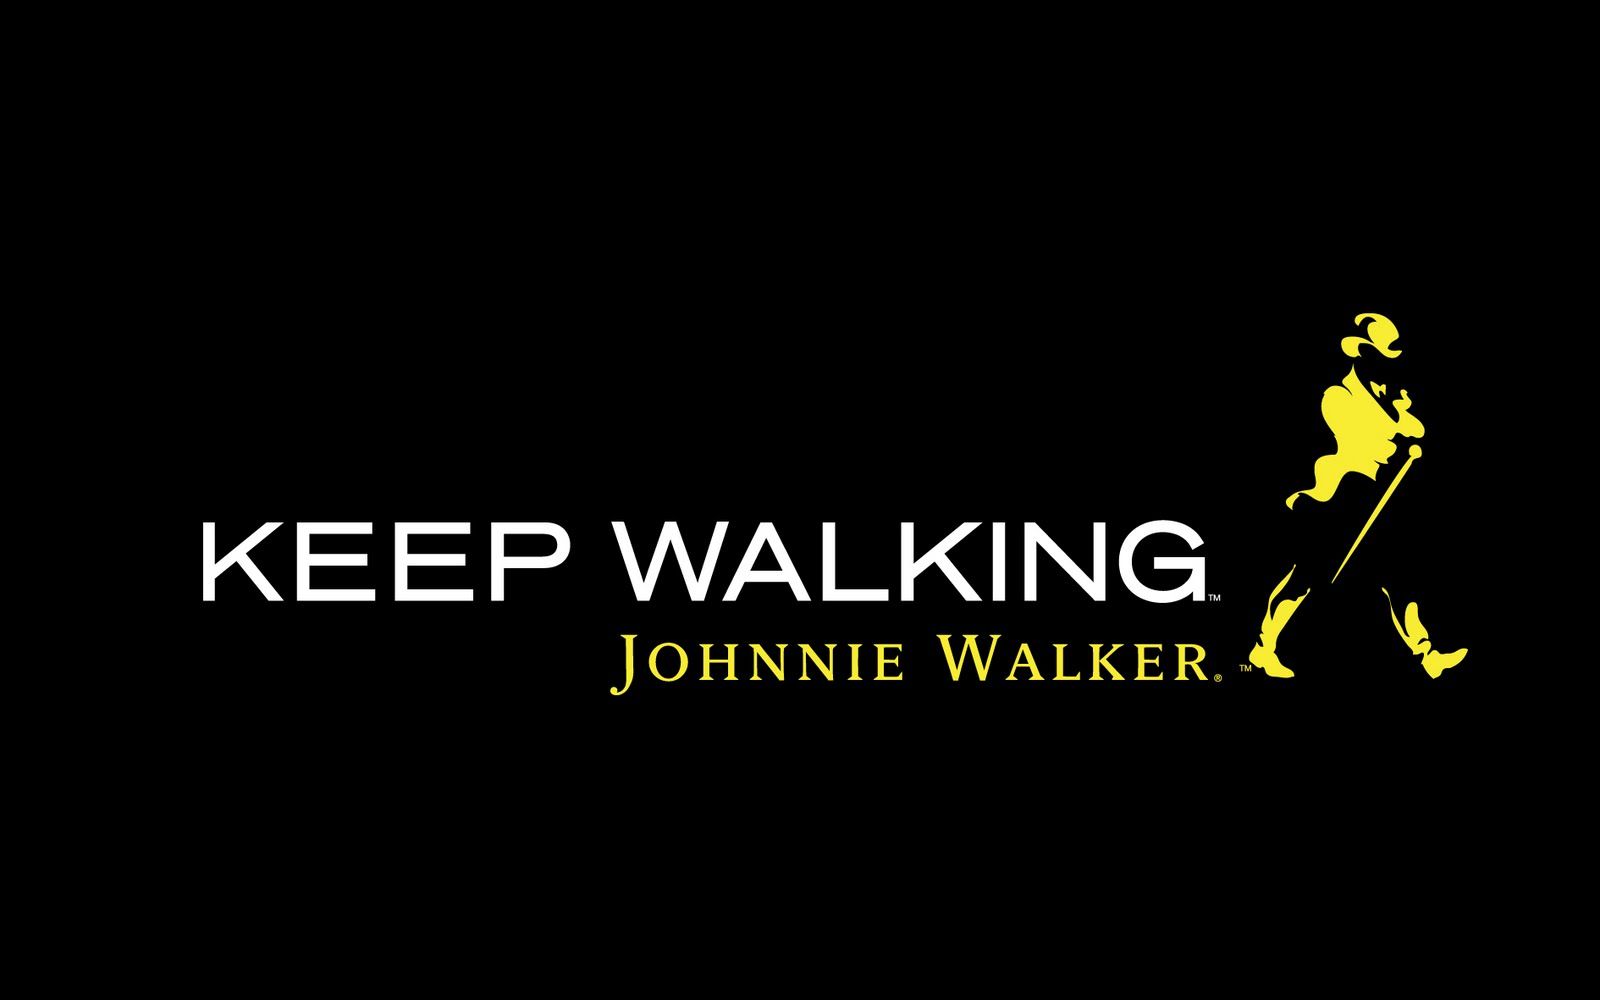 keep walking. Johnnie walker logo, Johnnie walker, Walker logo